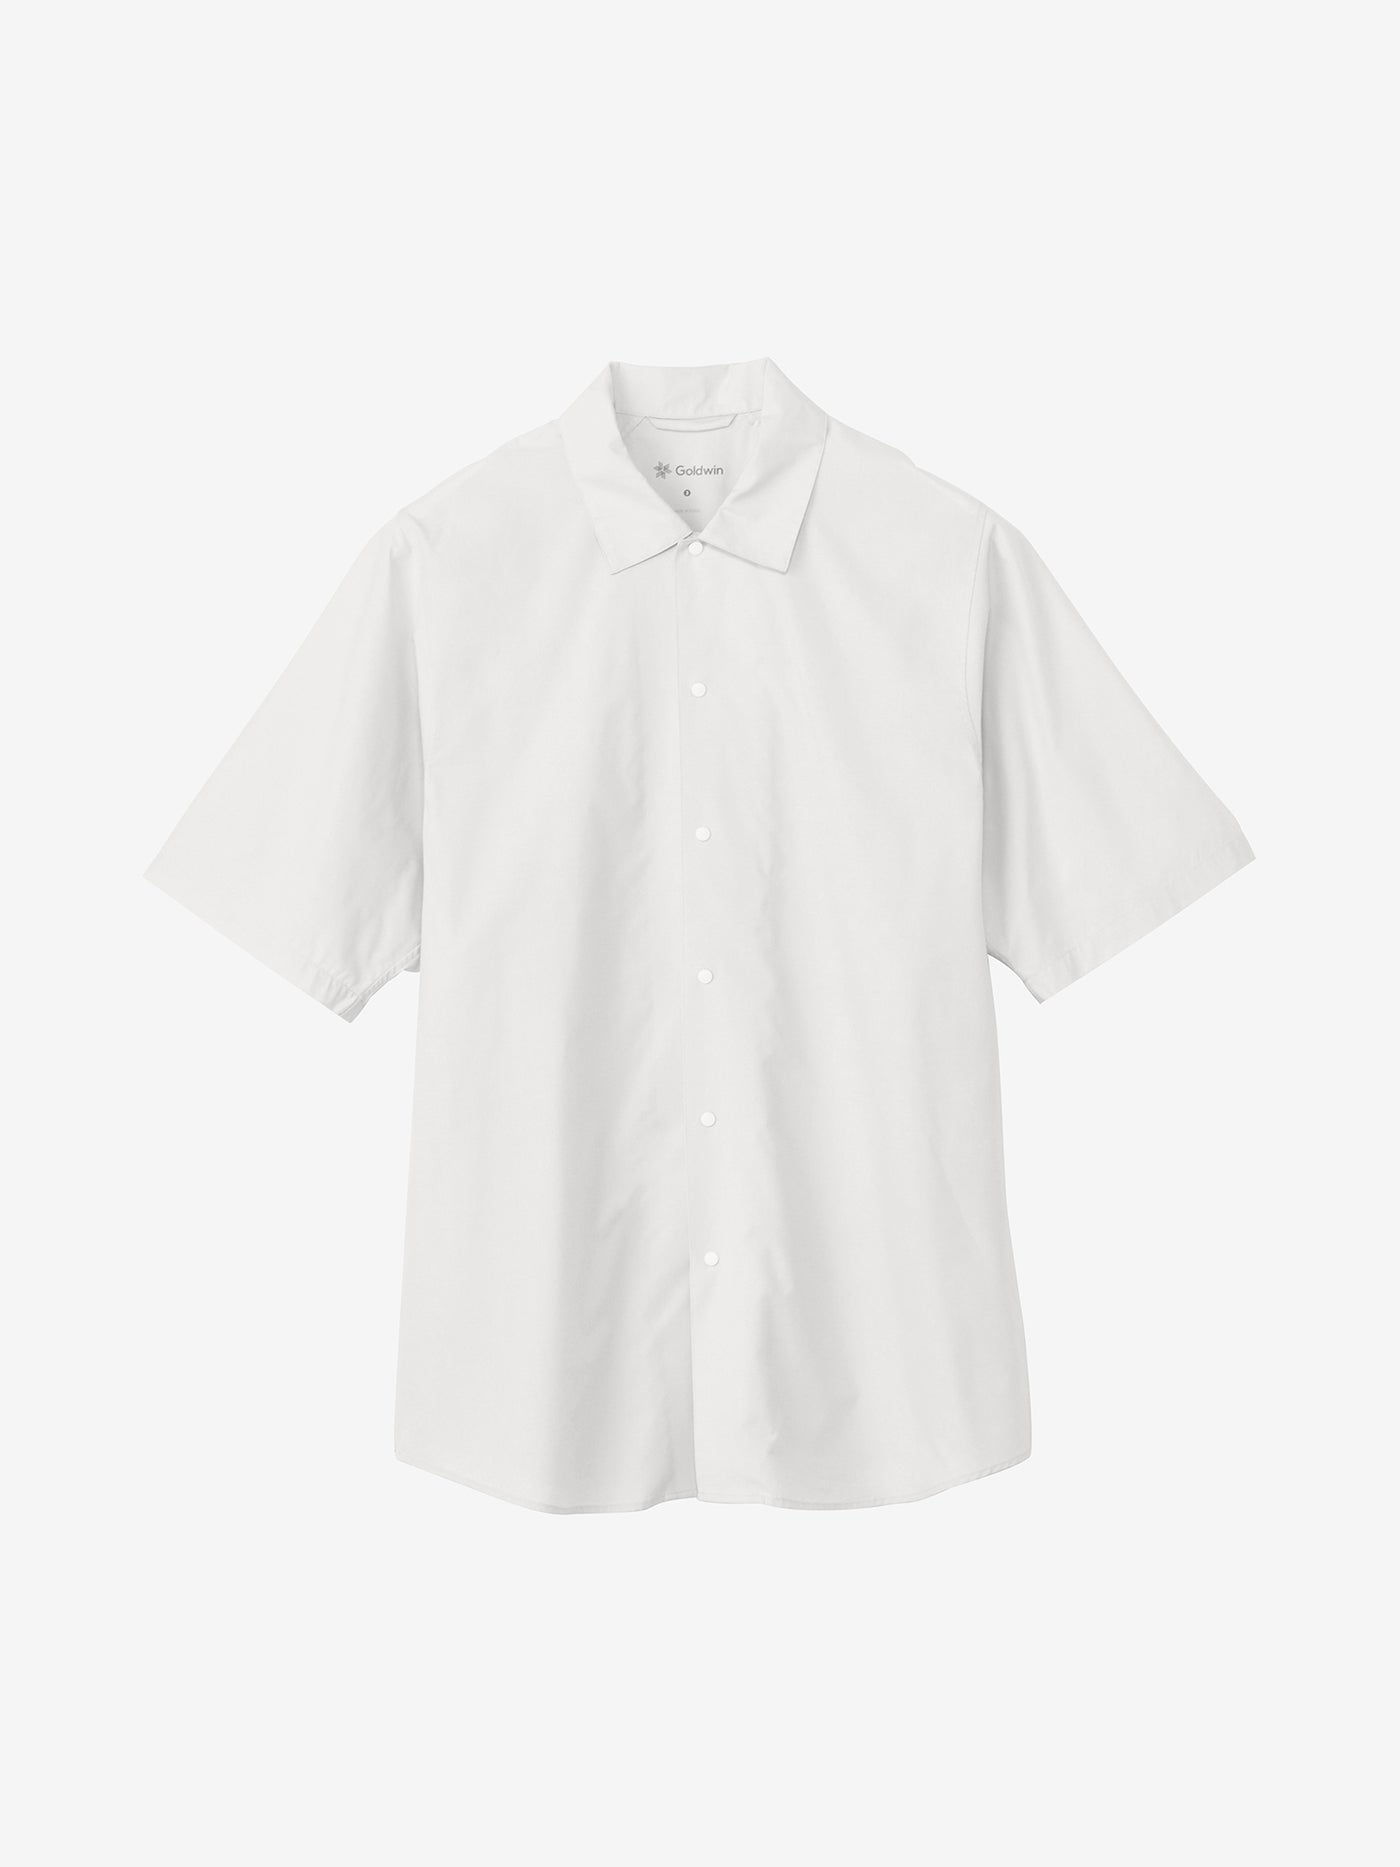 Cotton x Bamboo S/S Shirt